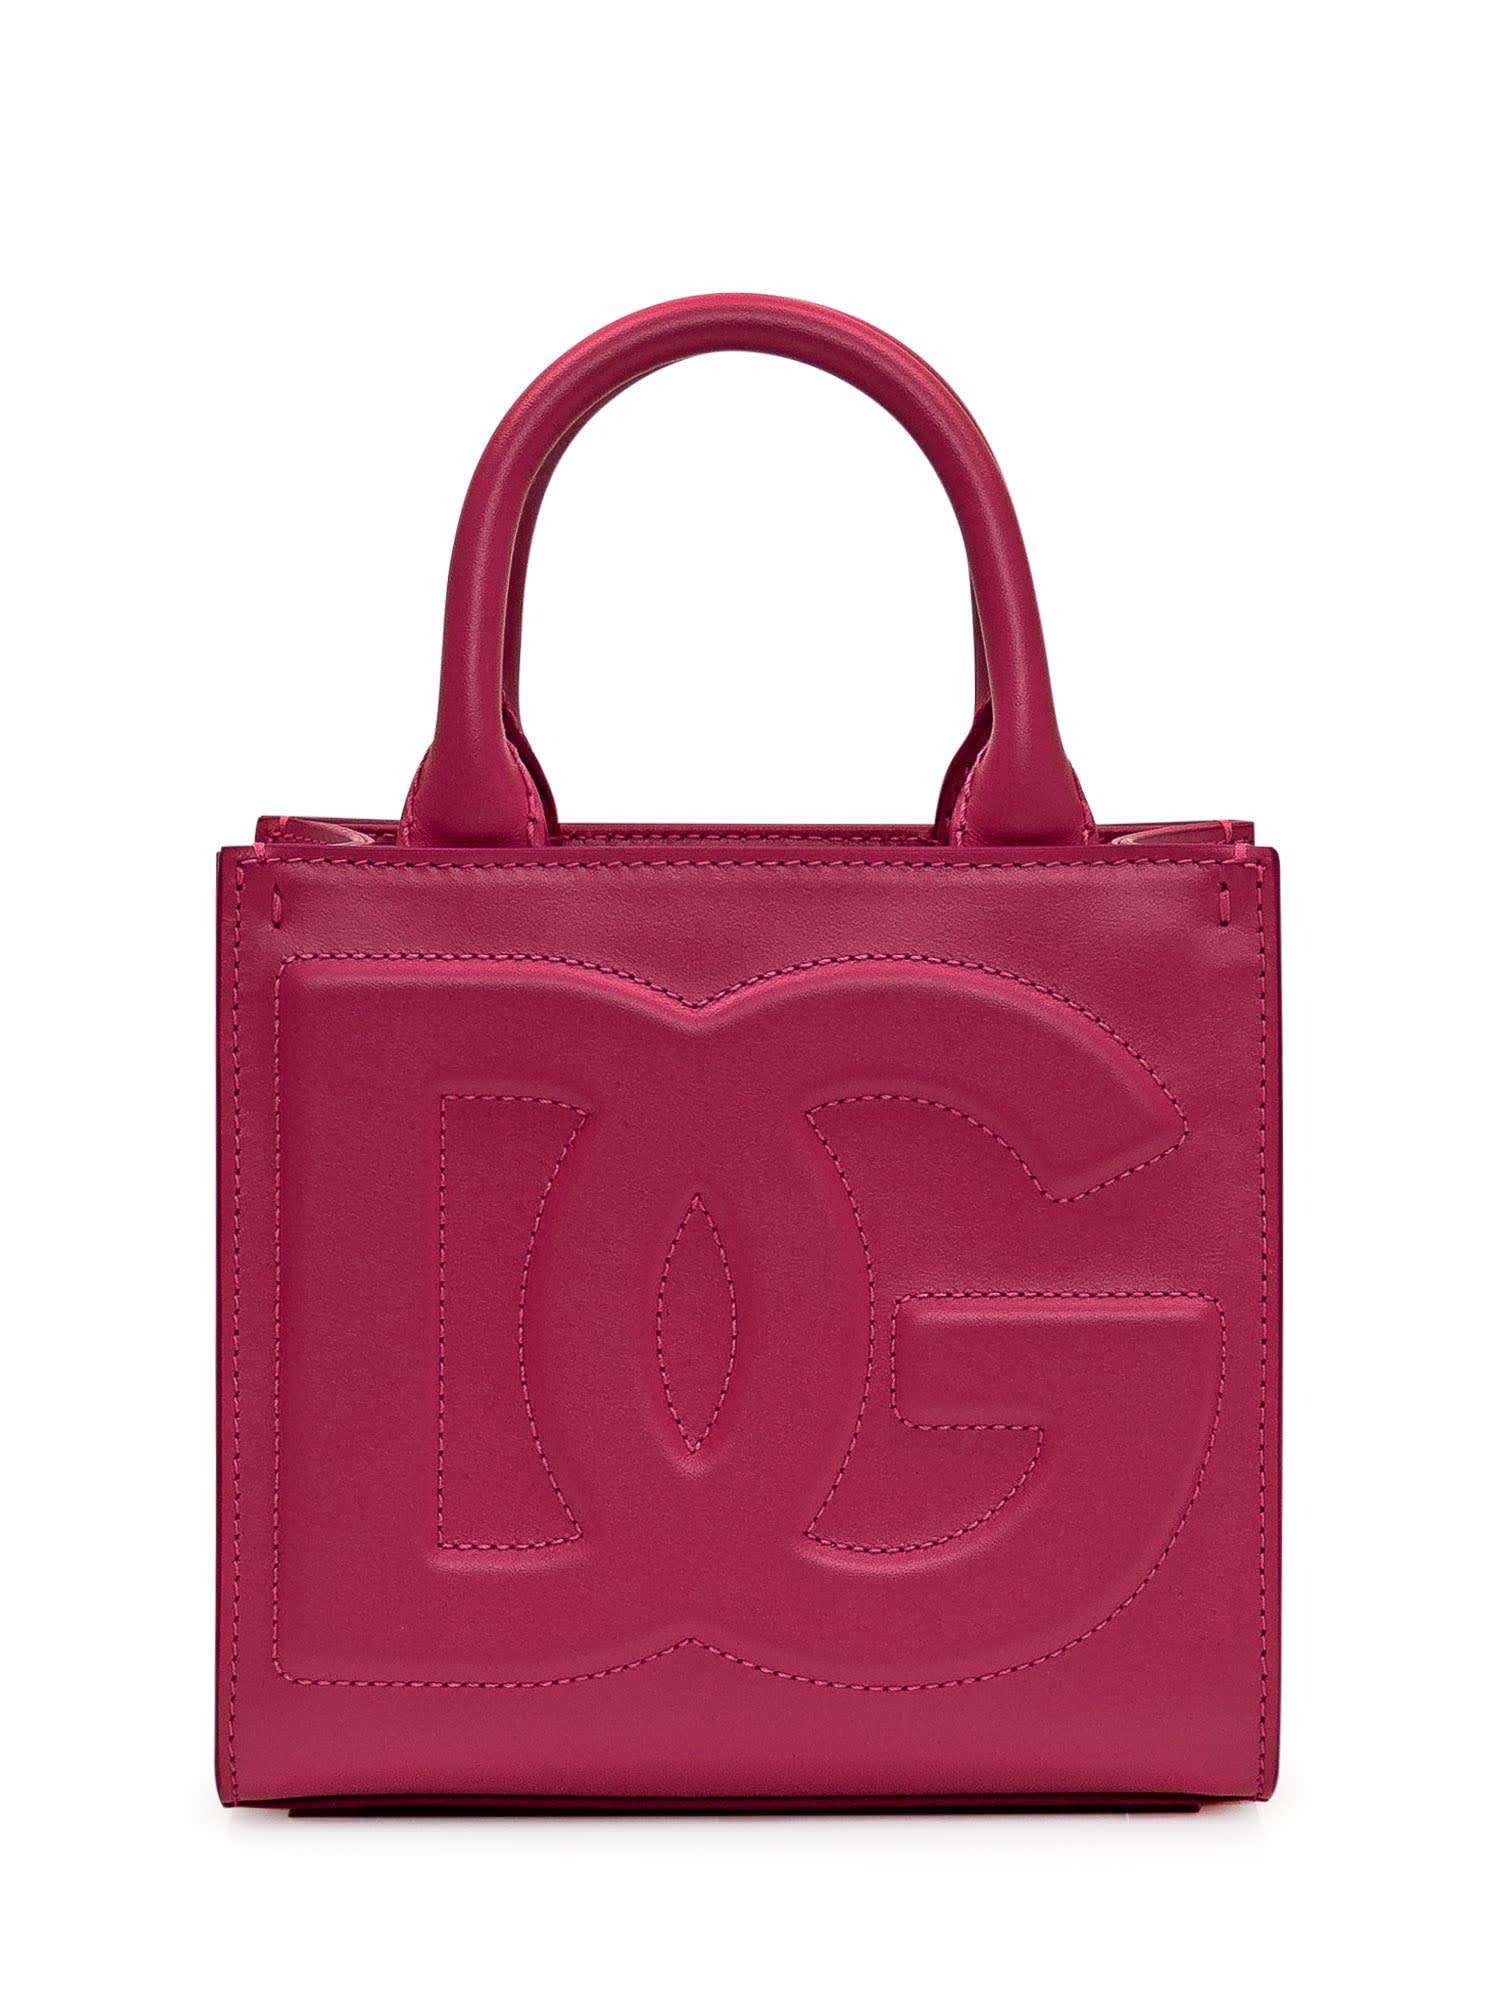 Dolce & Gabbana Shopping Bag in Red